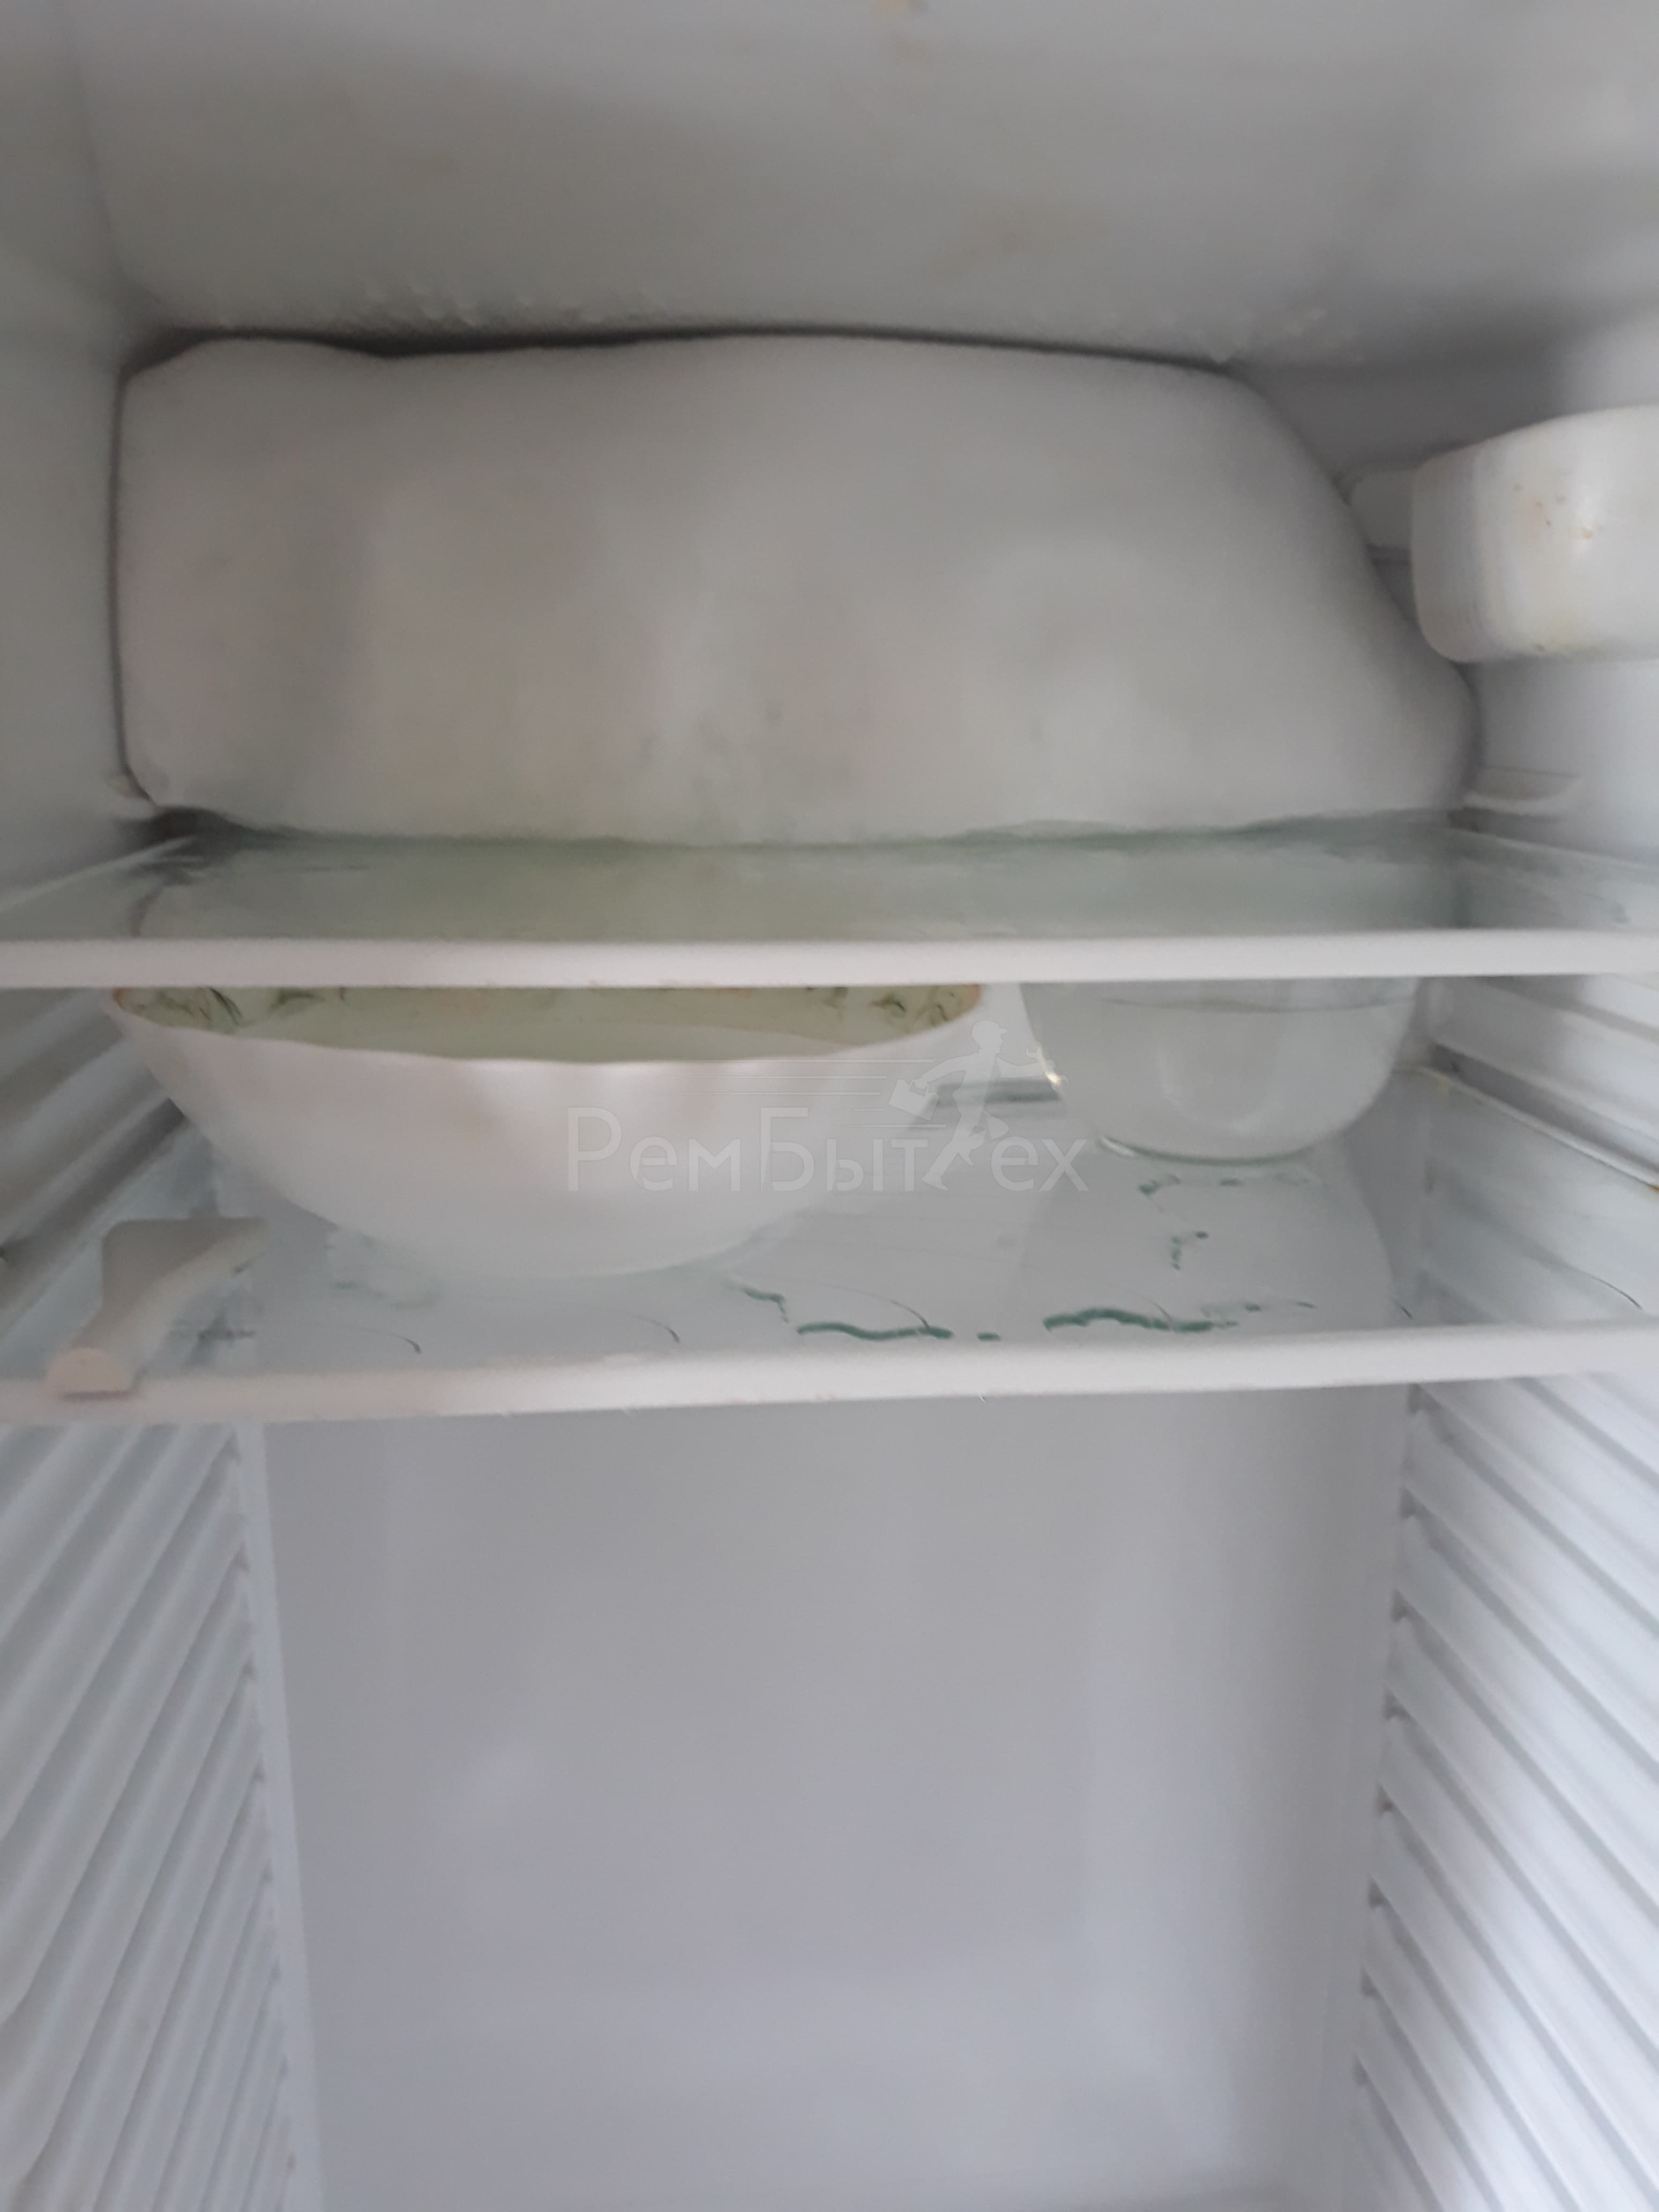 Почему в холодильнике намерзает снег. Холодильник Индезит намерзание. Бирюса намерзает лед. Холодильник Атлант 103 намерзает лед внутри холодильной камеры. Намерзает лед на испарителе в холодильнике Атлант хм4425 009 ND.